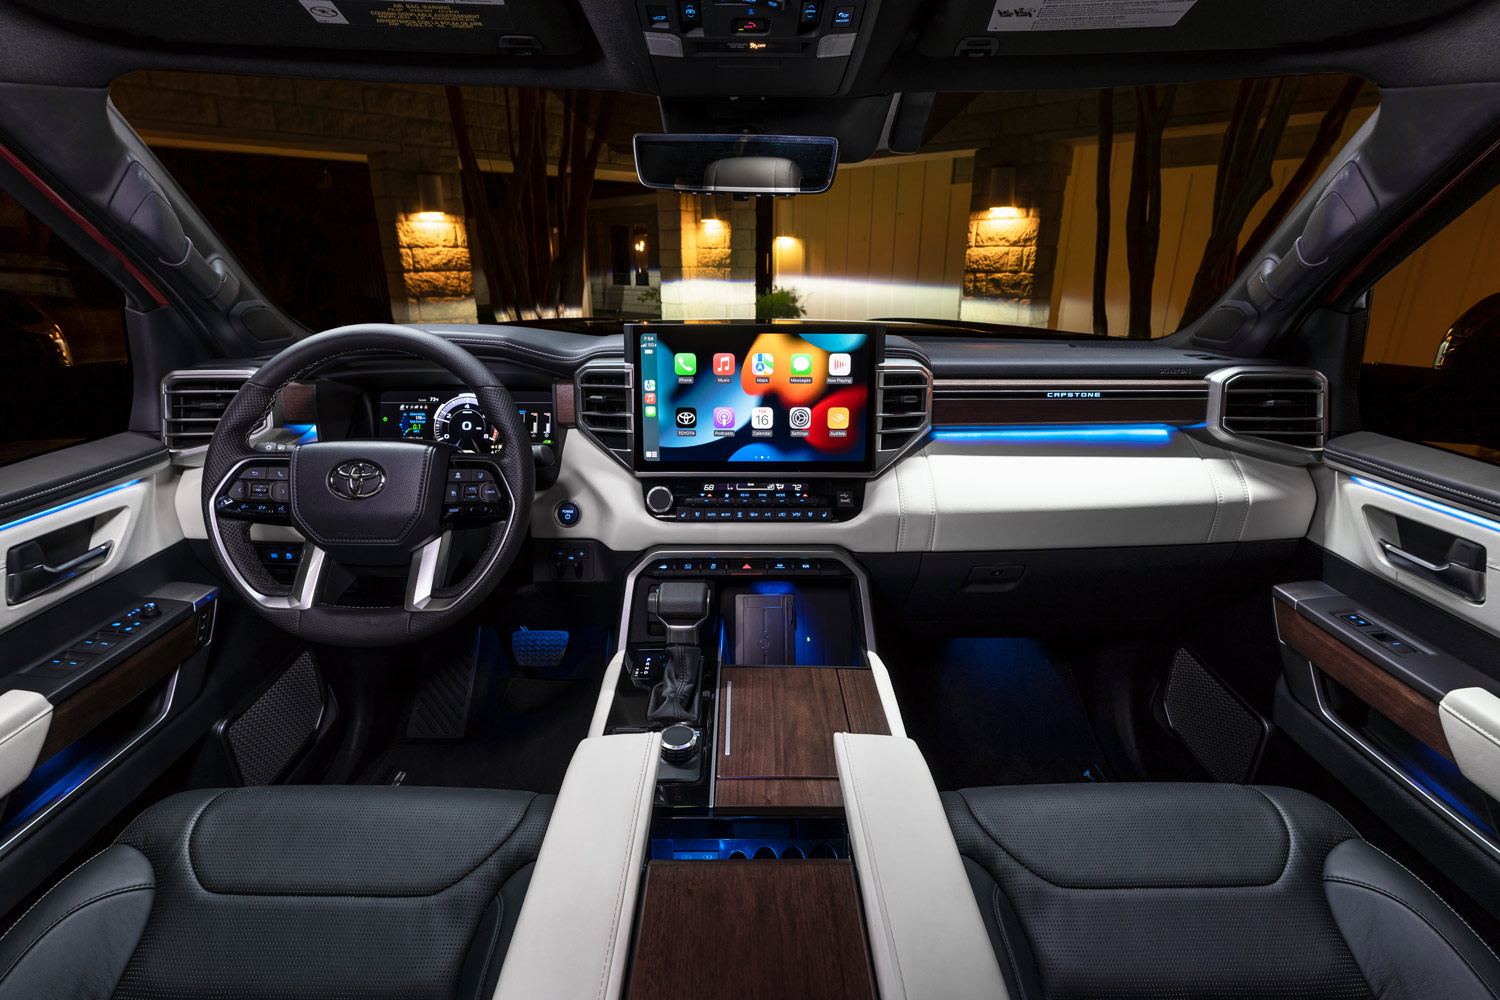 2023 Toyota Sequoia Capstone interior and infotainment system